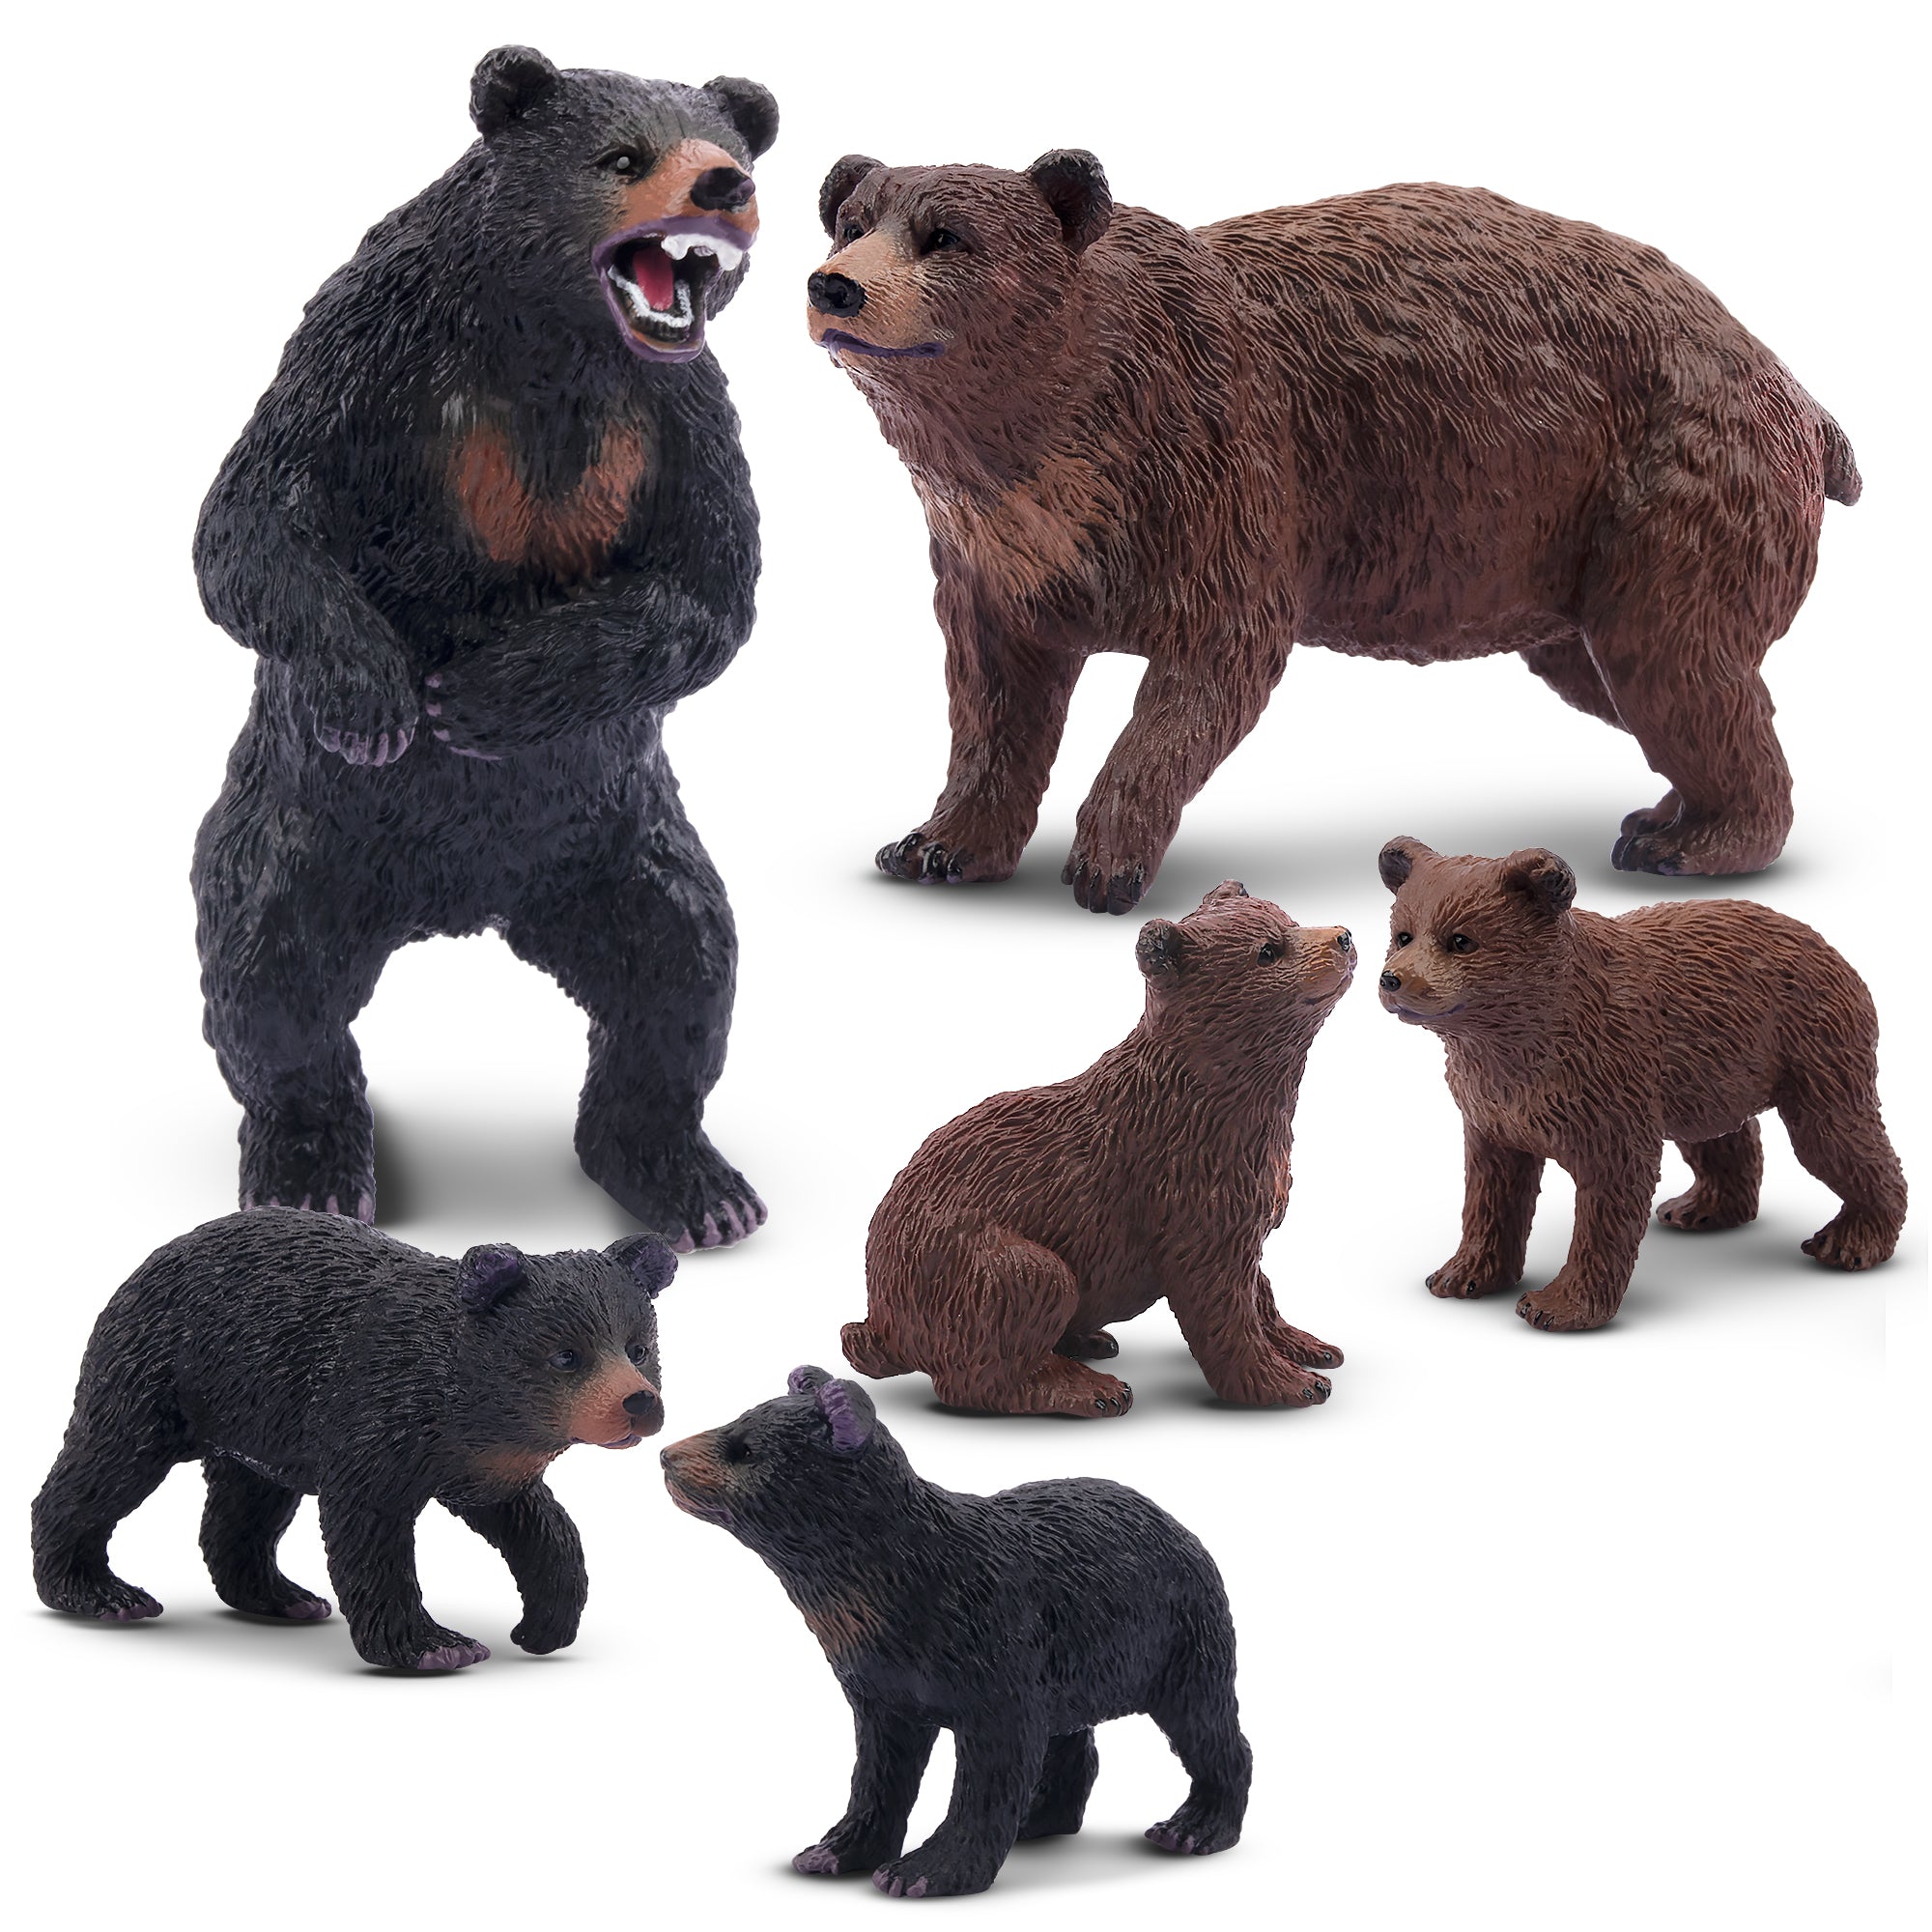 6-Piece Bear Figurines Playset with Brown & Black Bears